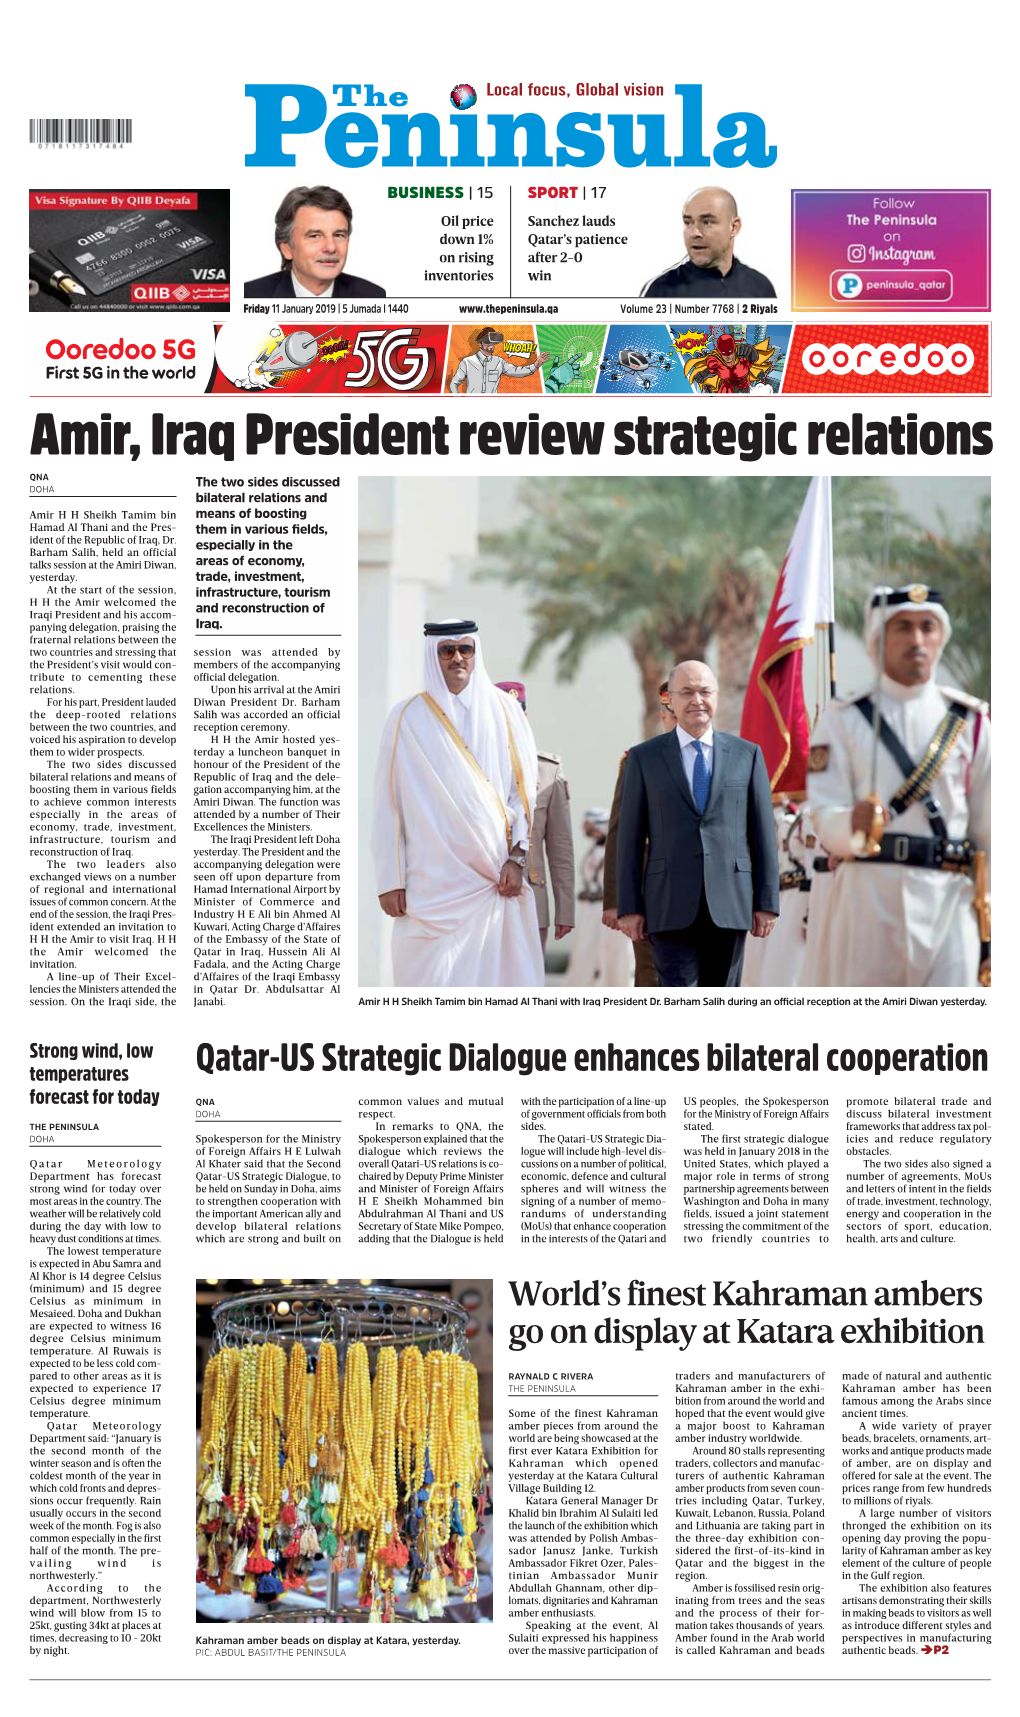 Amir, Iraq President Review Strategic Relations